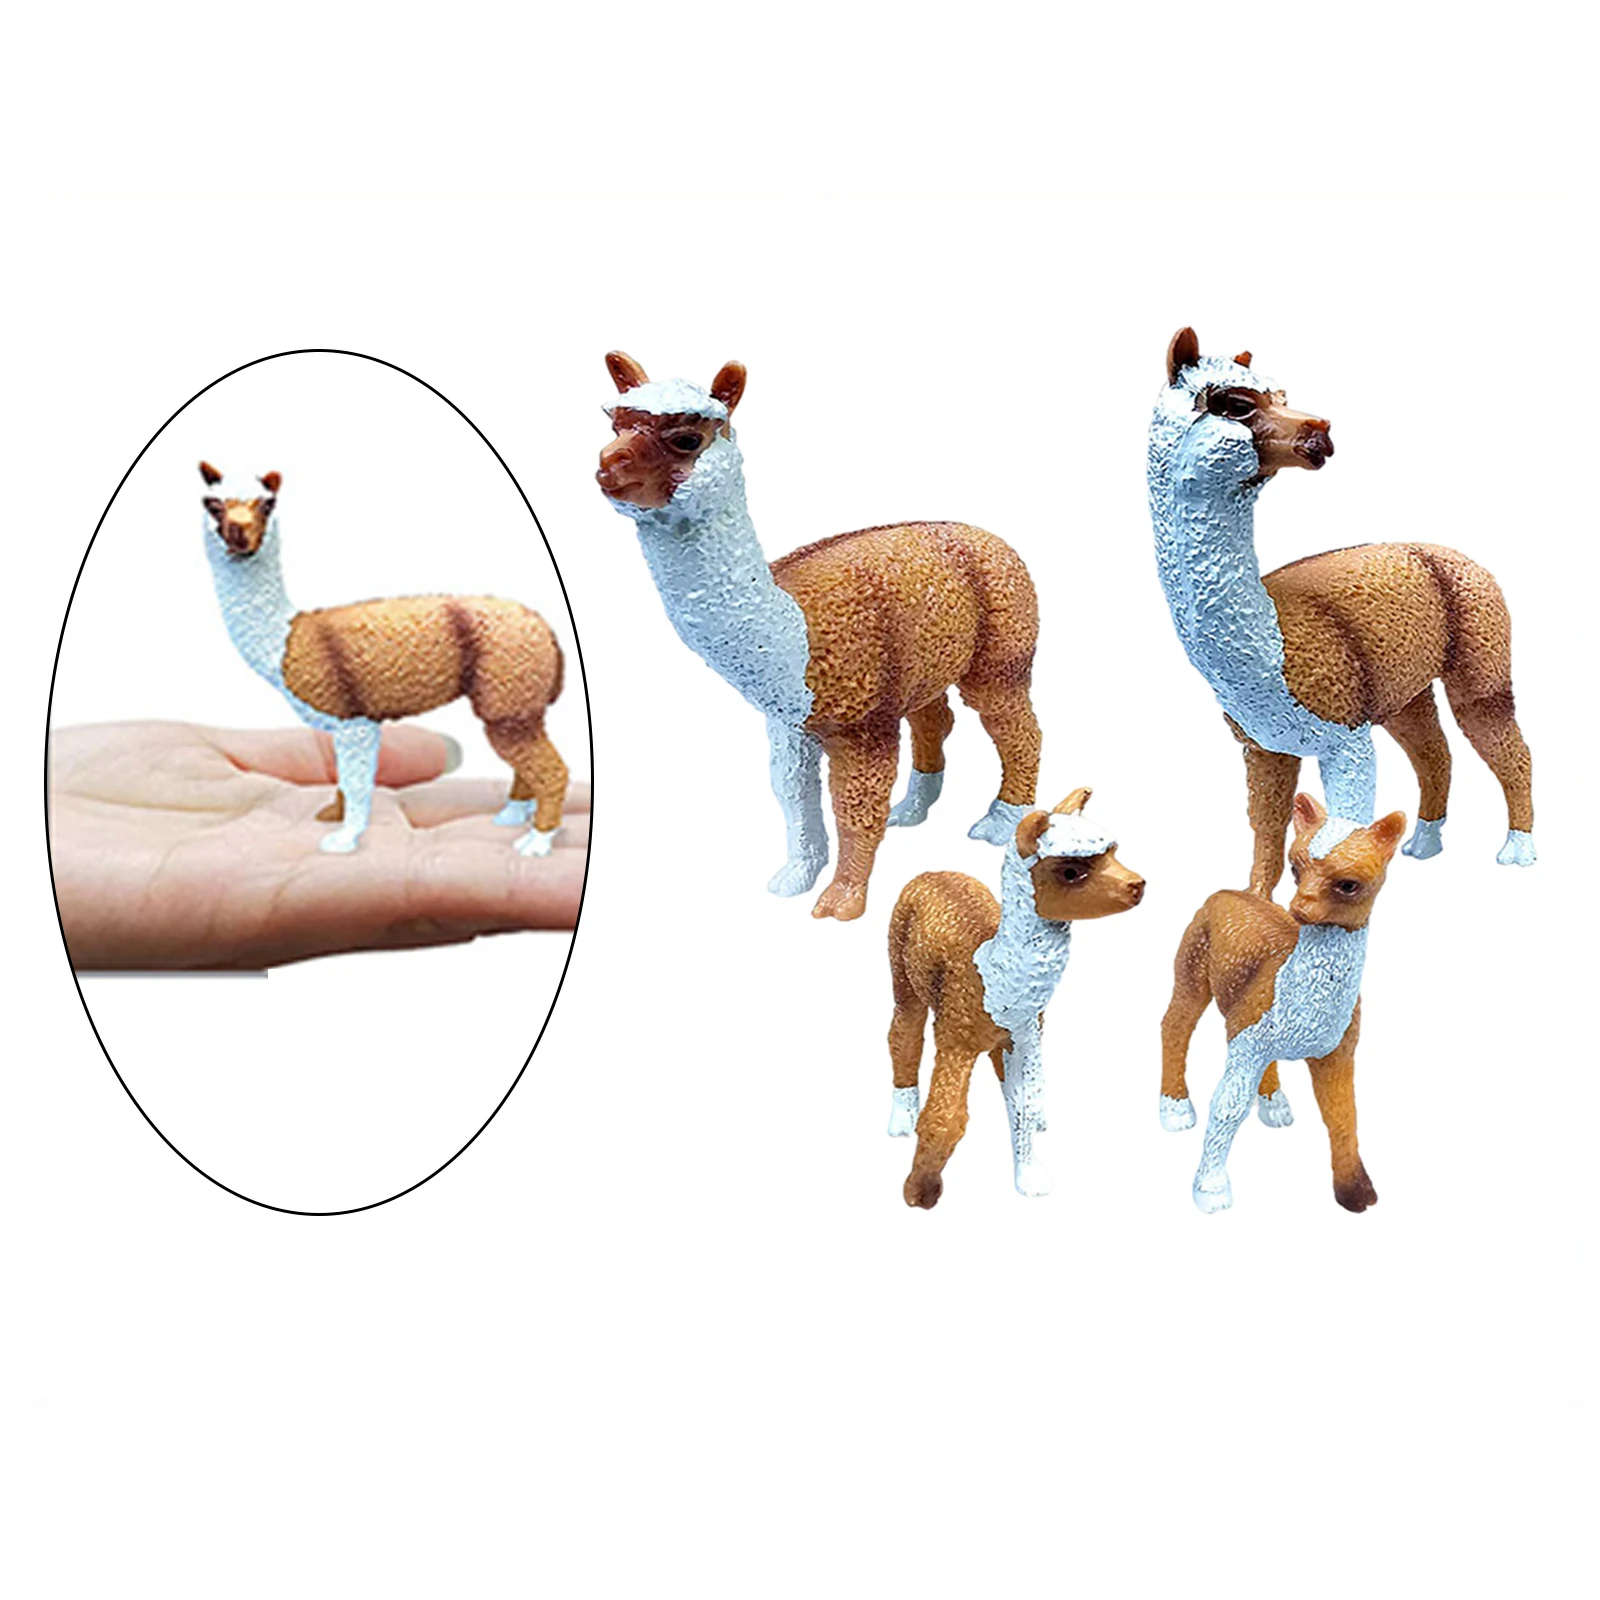 

4Pcs Lifelike Alpaca Figure Wildlife Farm Animal Model Toy Home Decors Gift